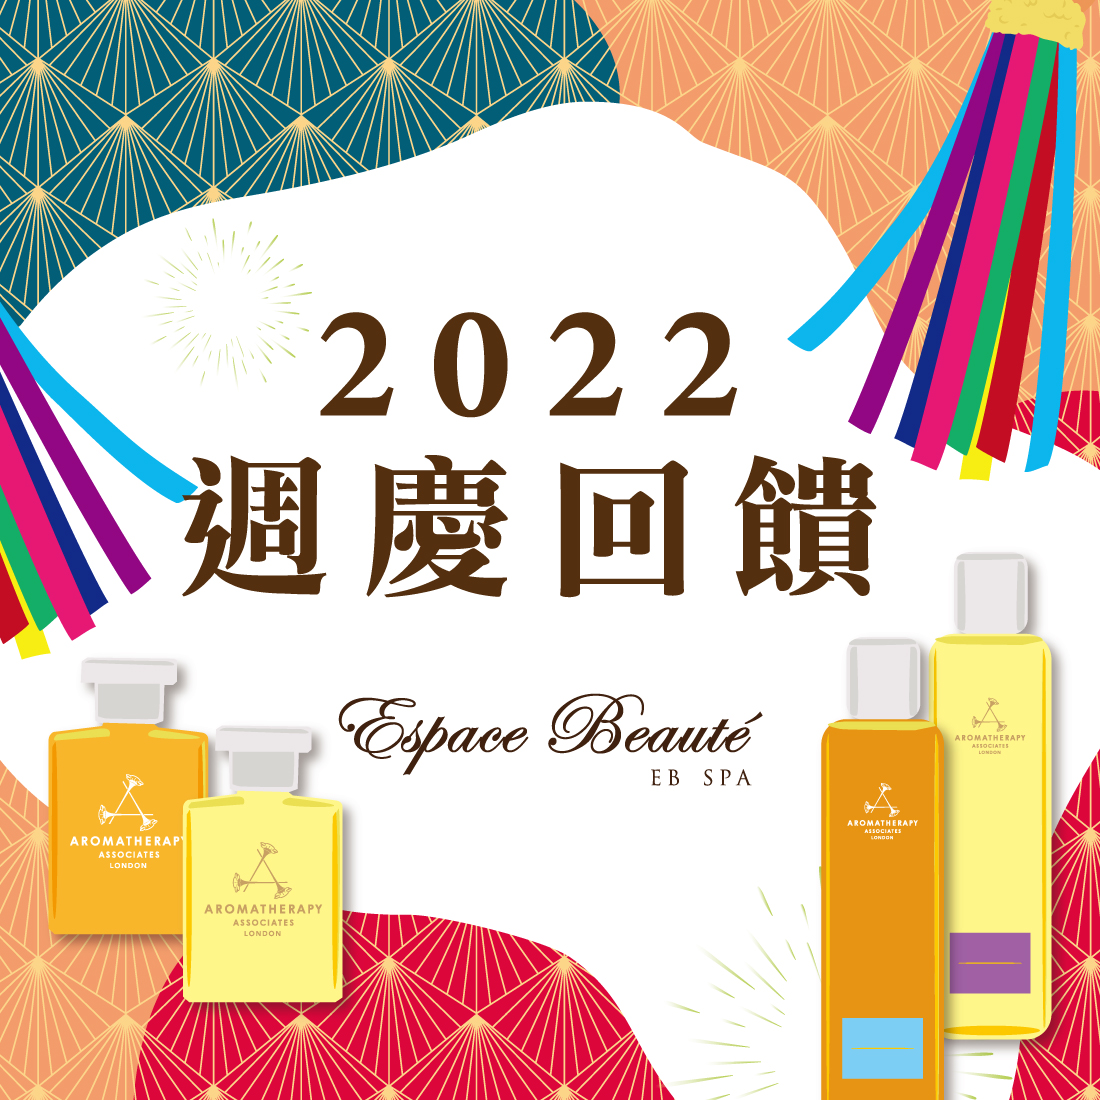 202209_EB-SPA-週慶-W1100.jpg